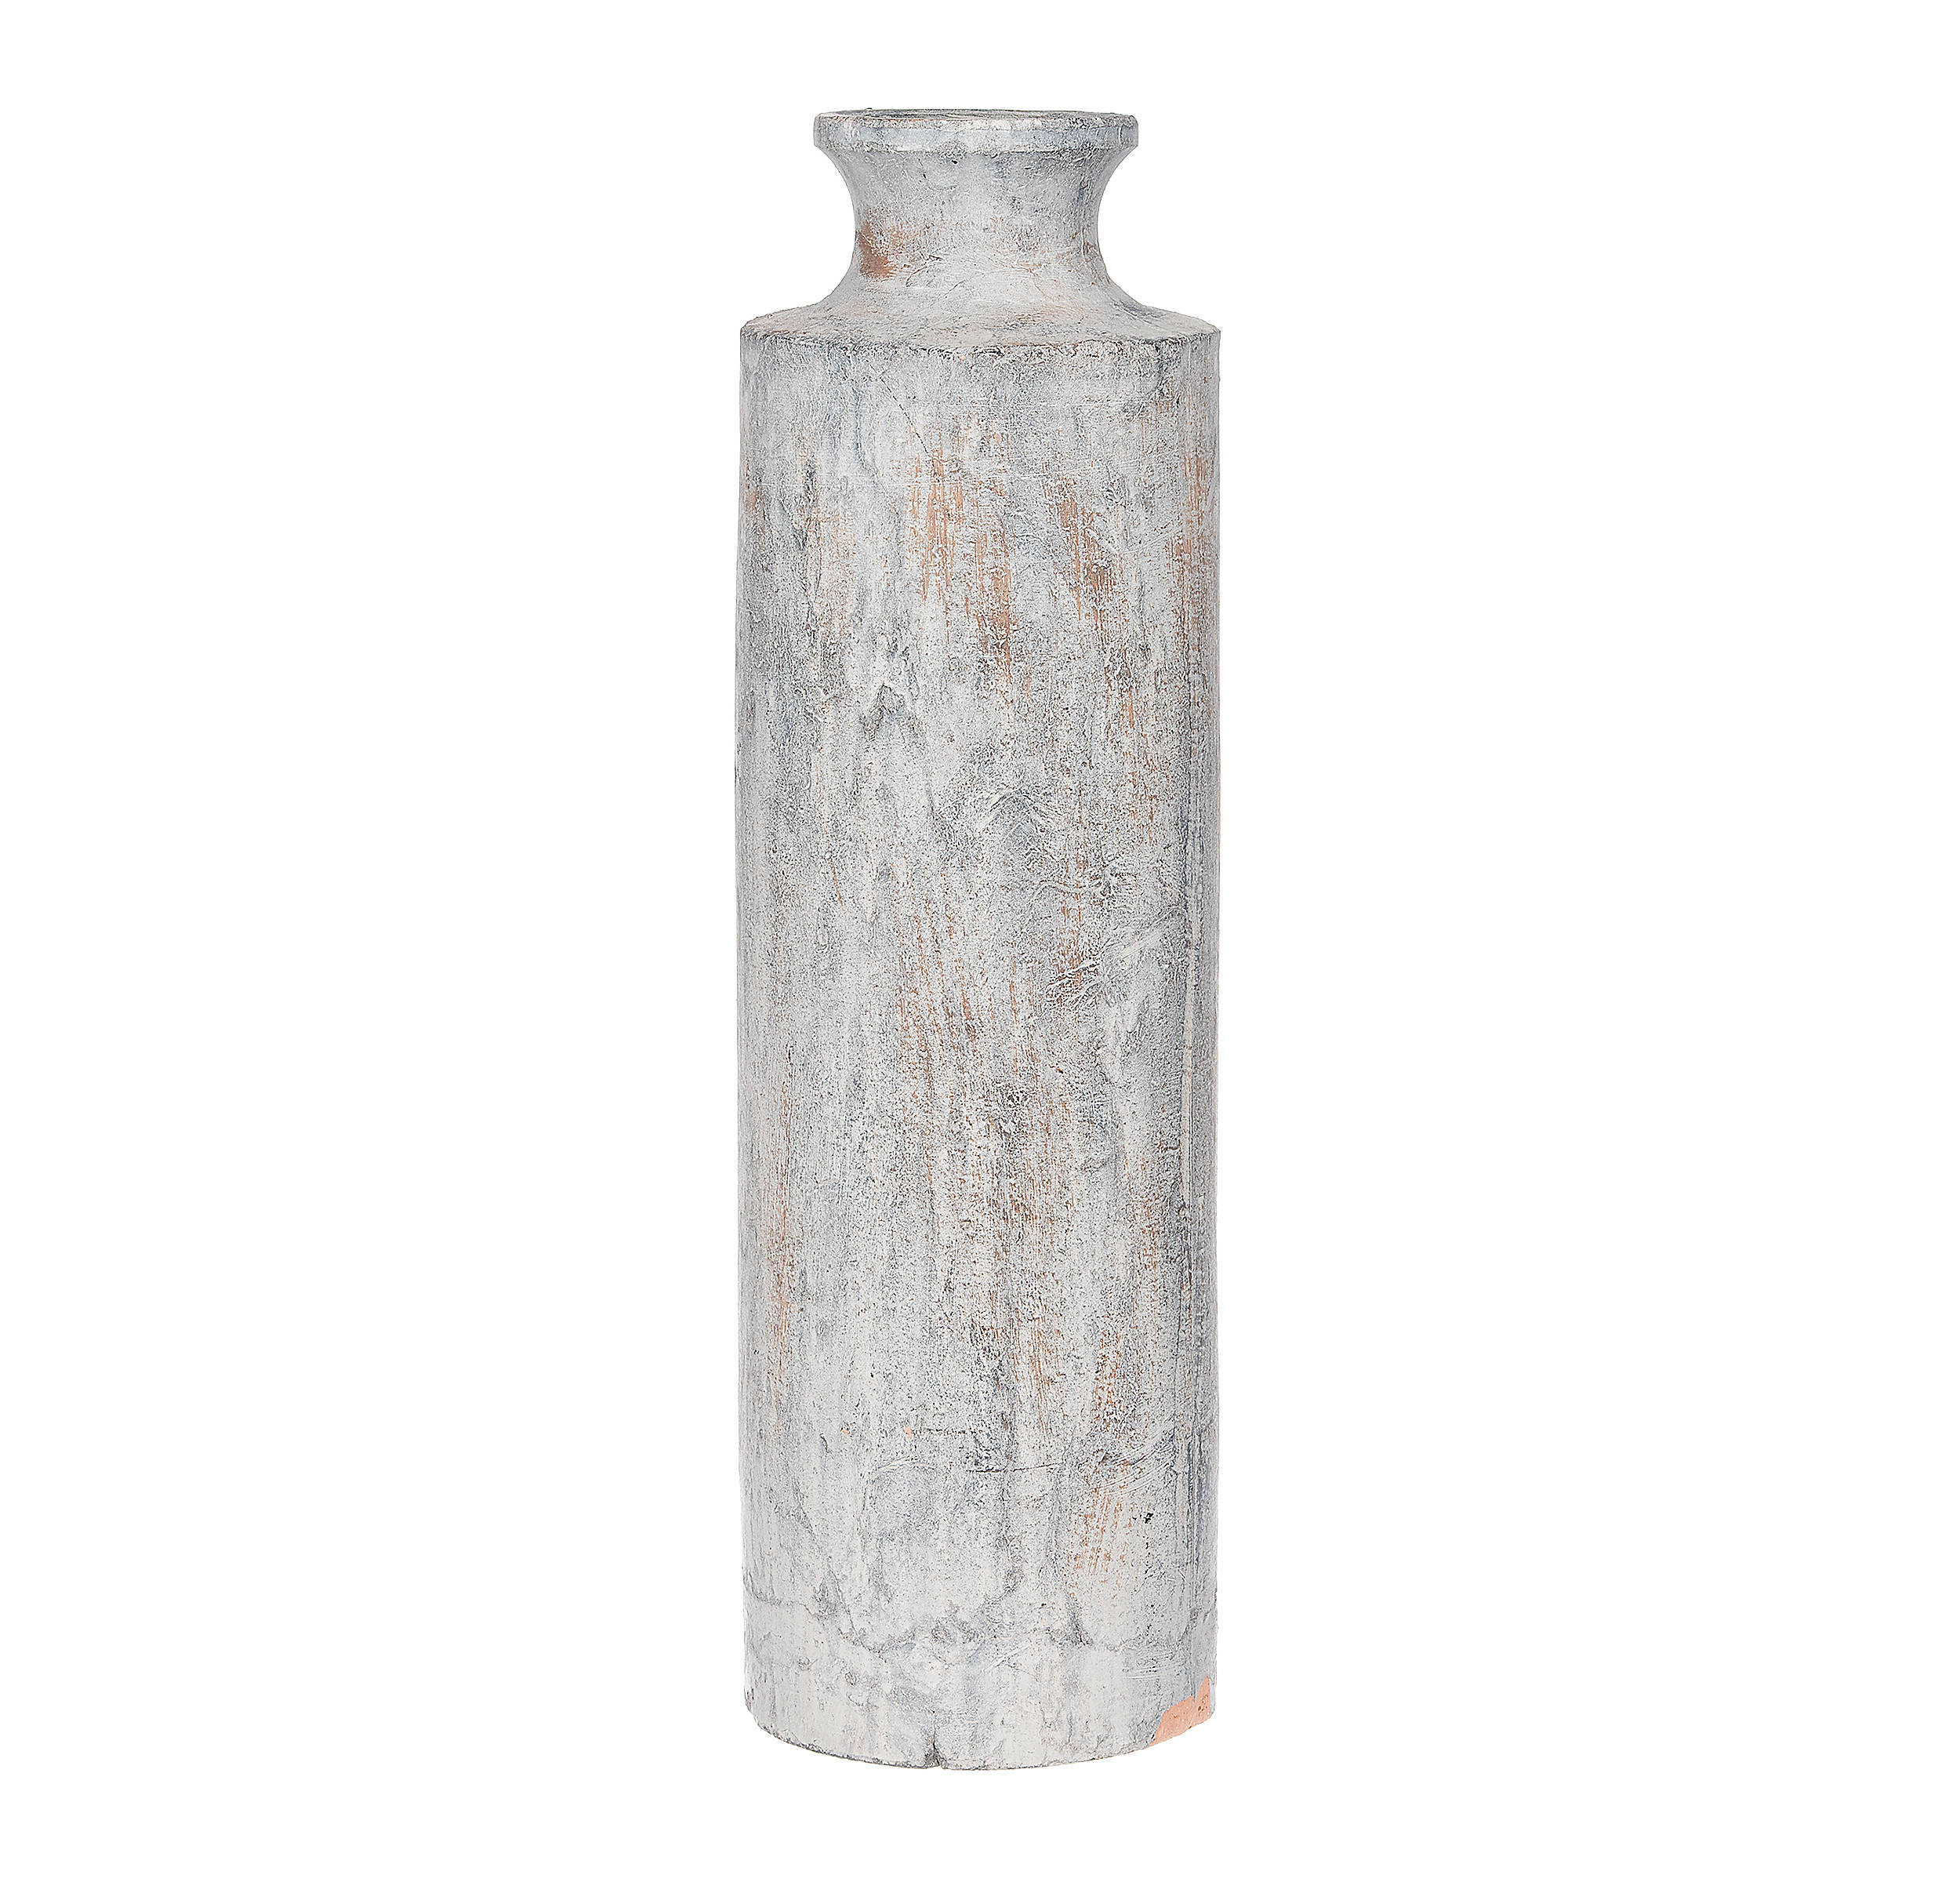 Shop White Concrete Finish Ceramic Vase from Kirkland's on Openhaus